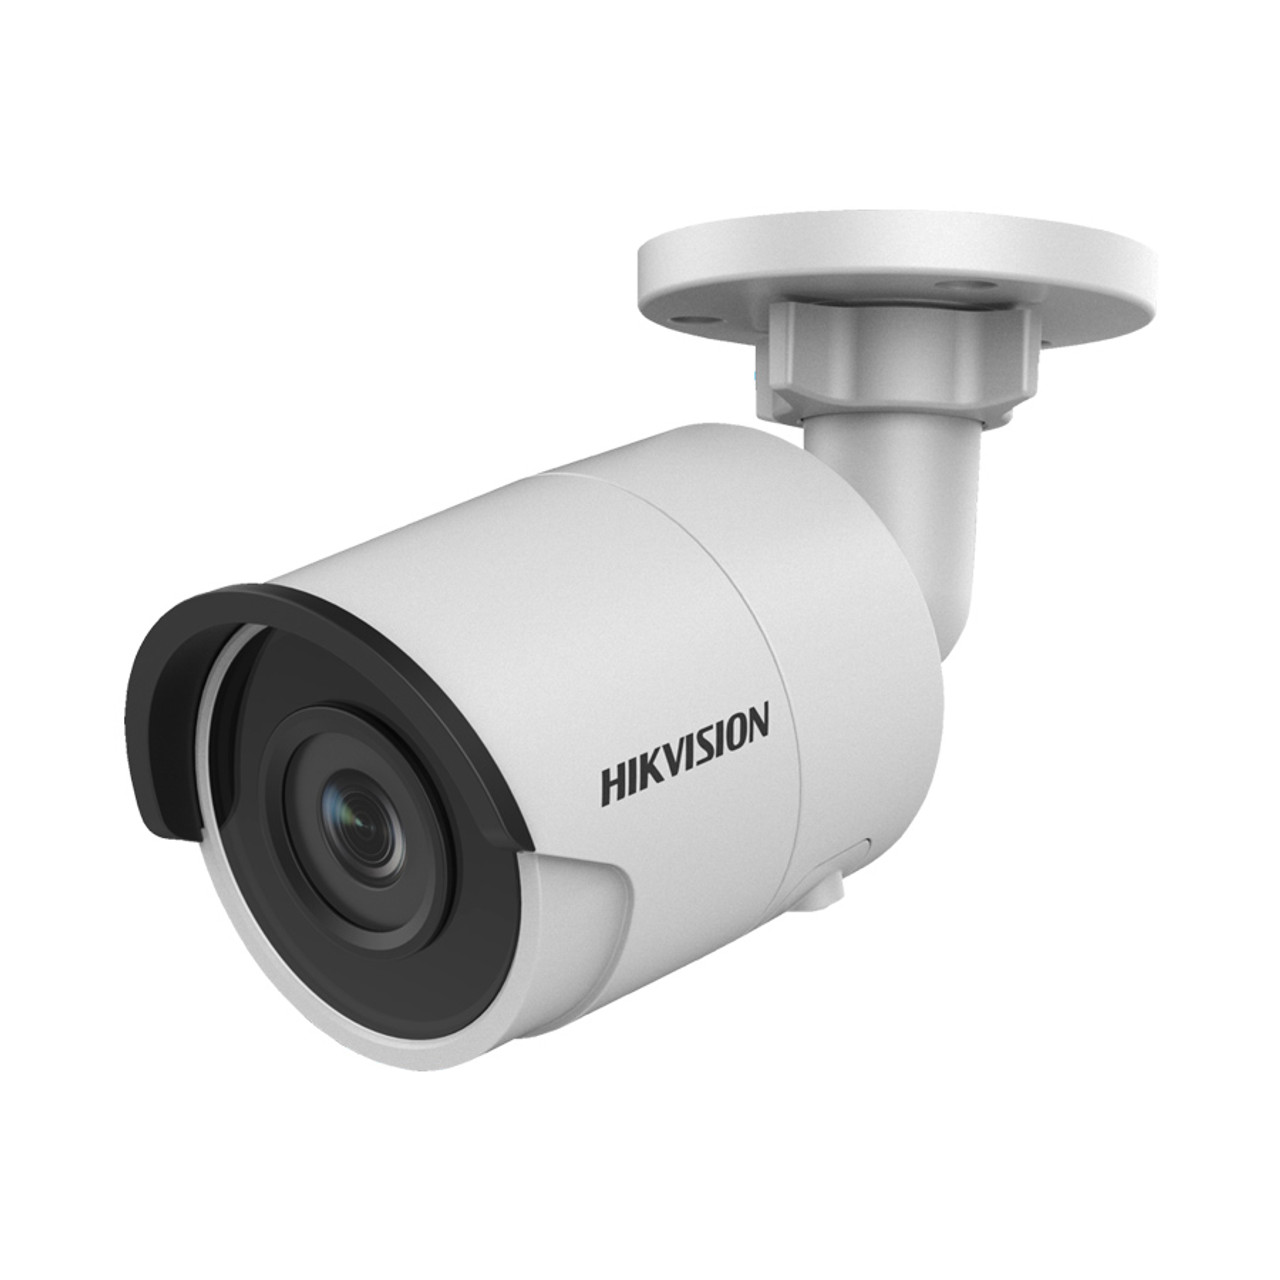 hikvision cameras